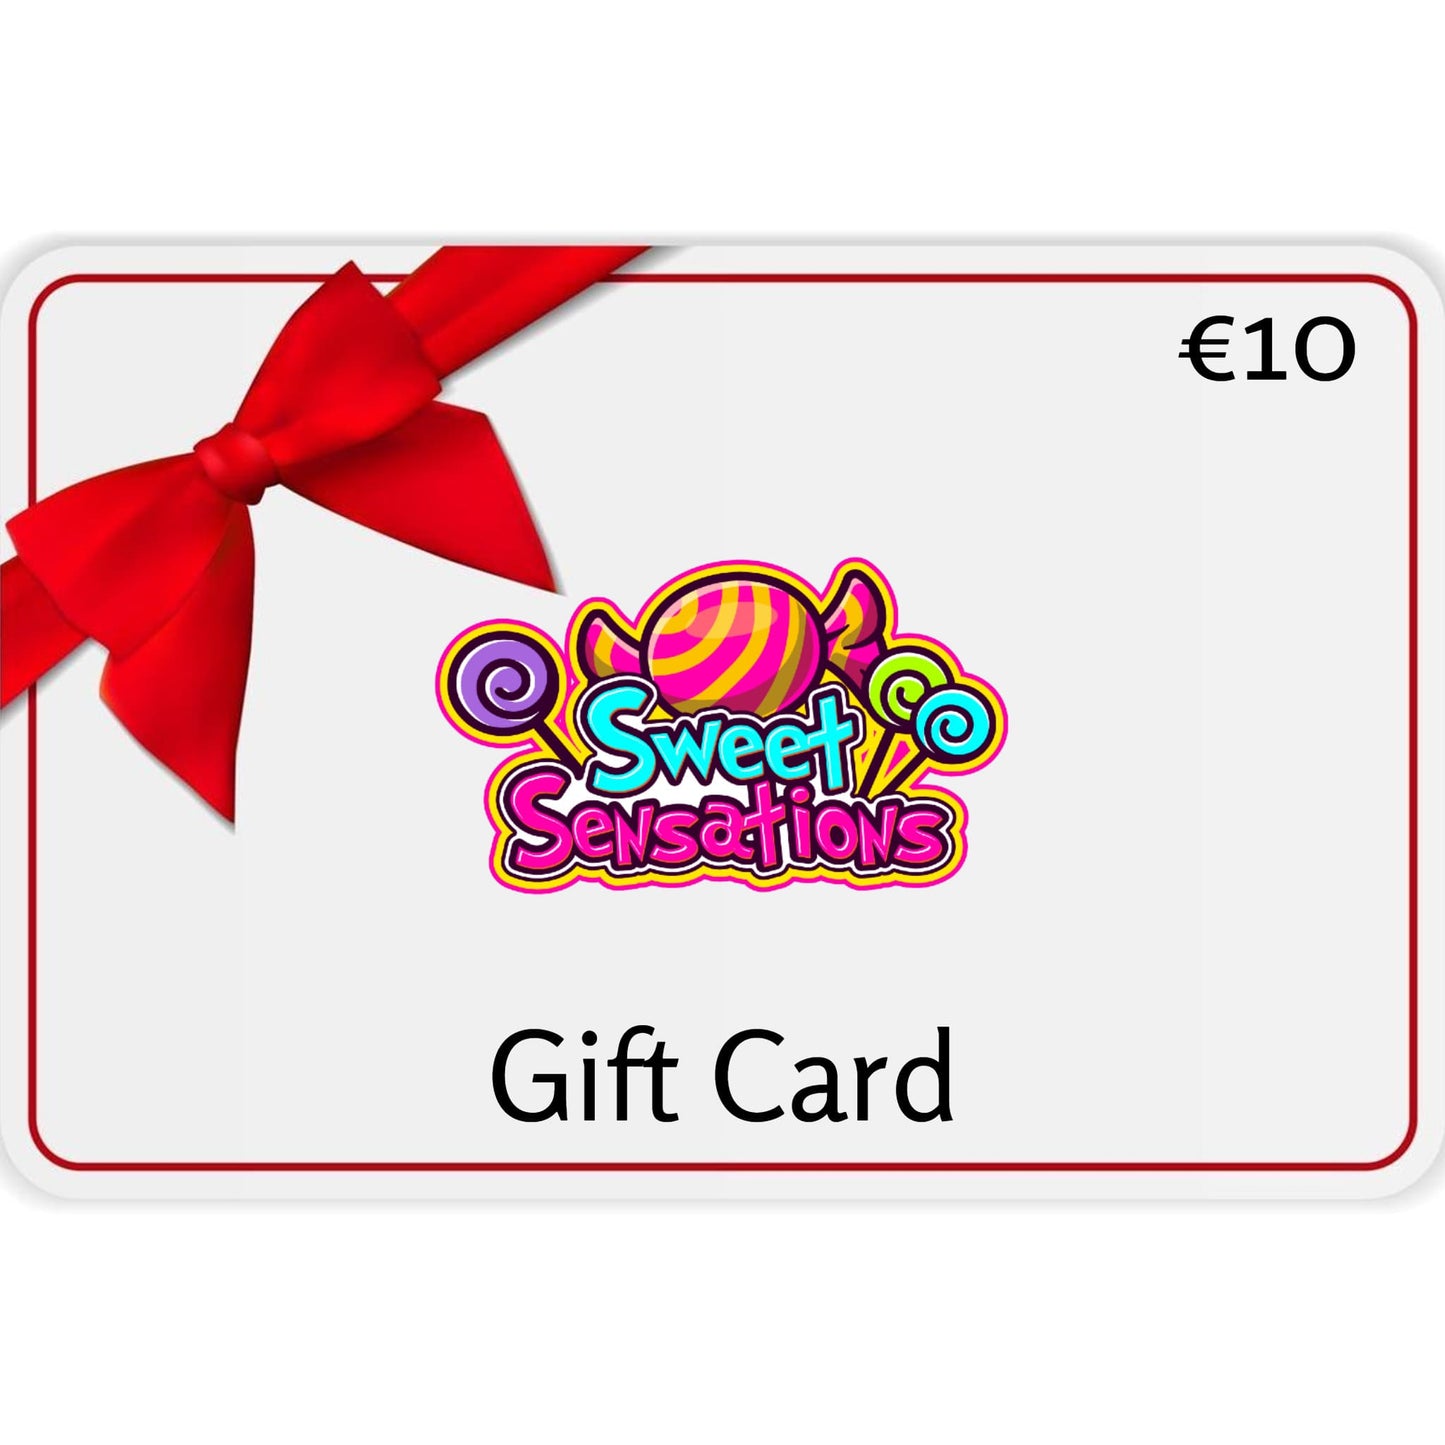 Sweet Sensations €10 Gift Card